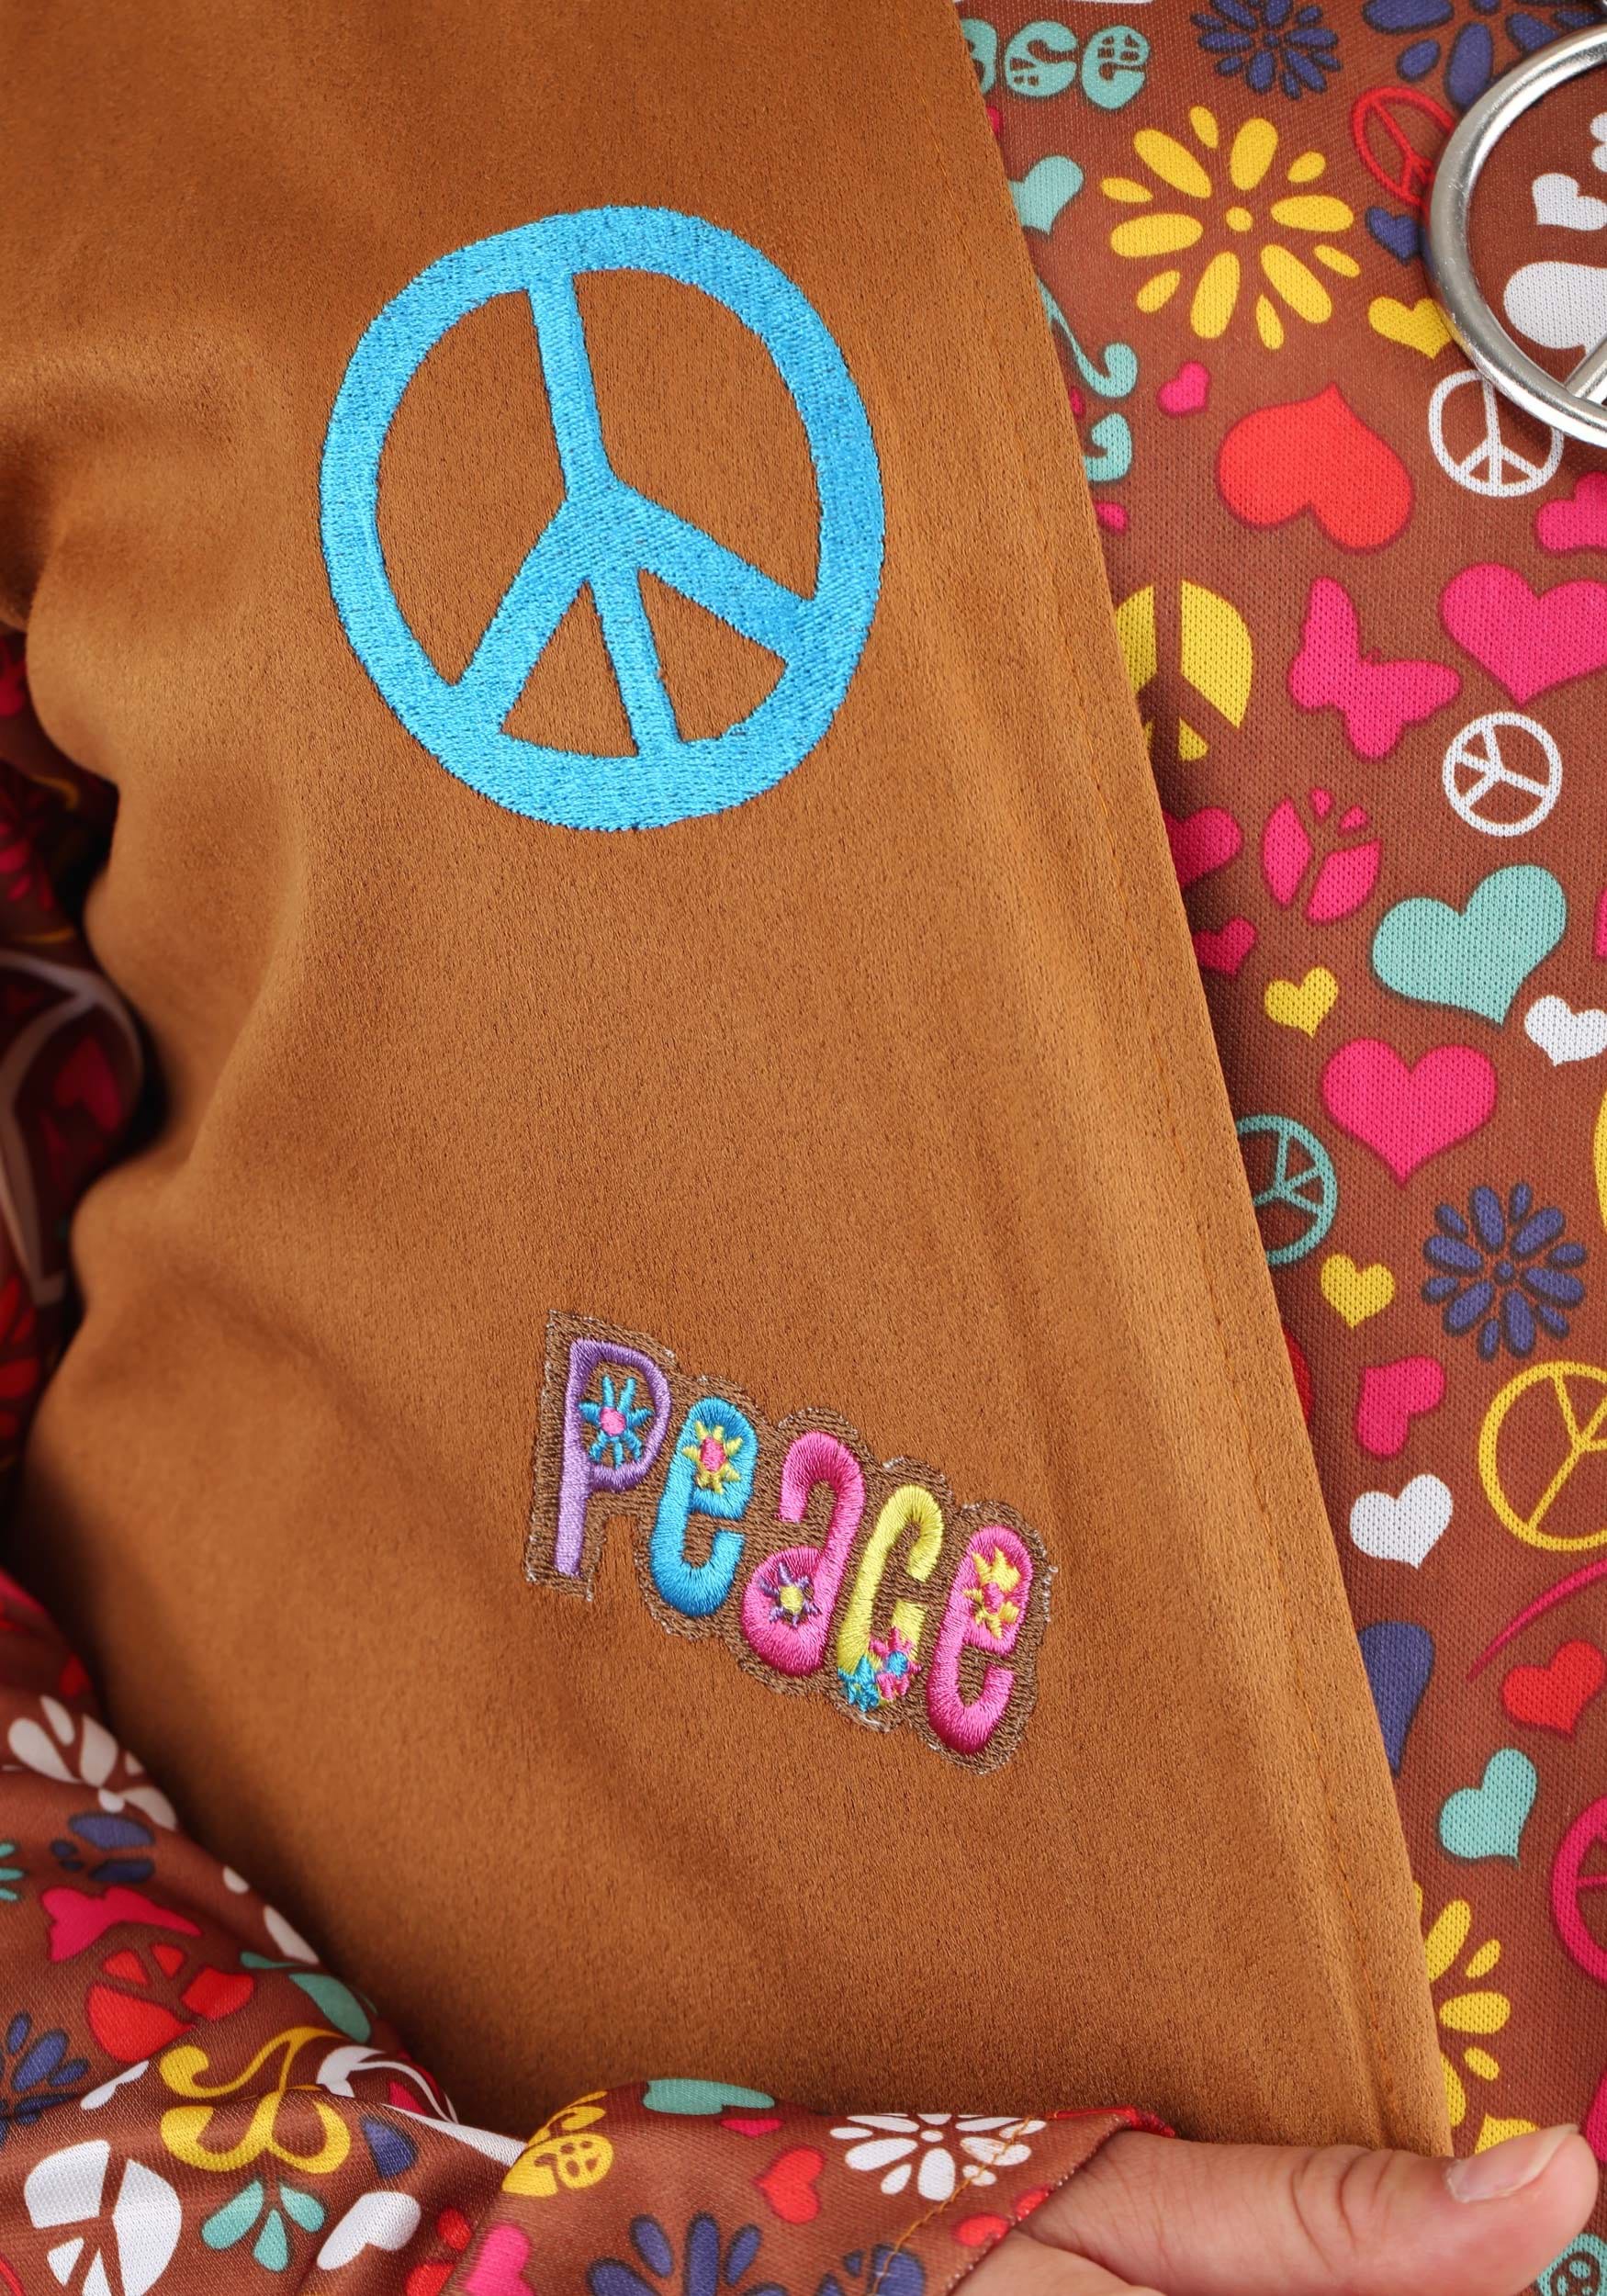 Peace & Love Plus Size Women's Costume , Hippie Plus Size Costume